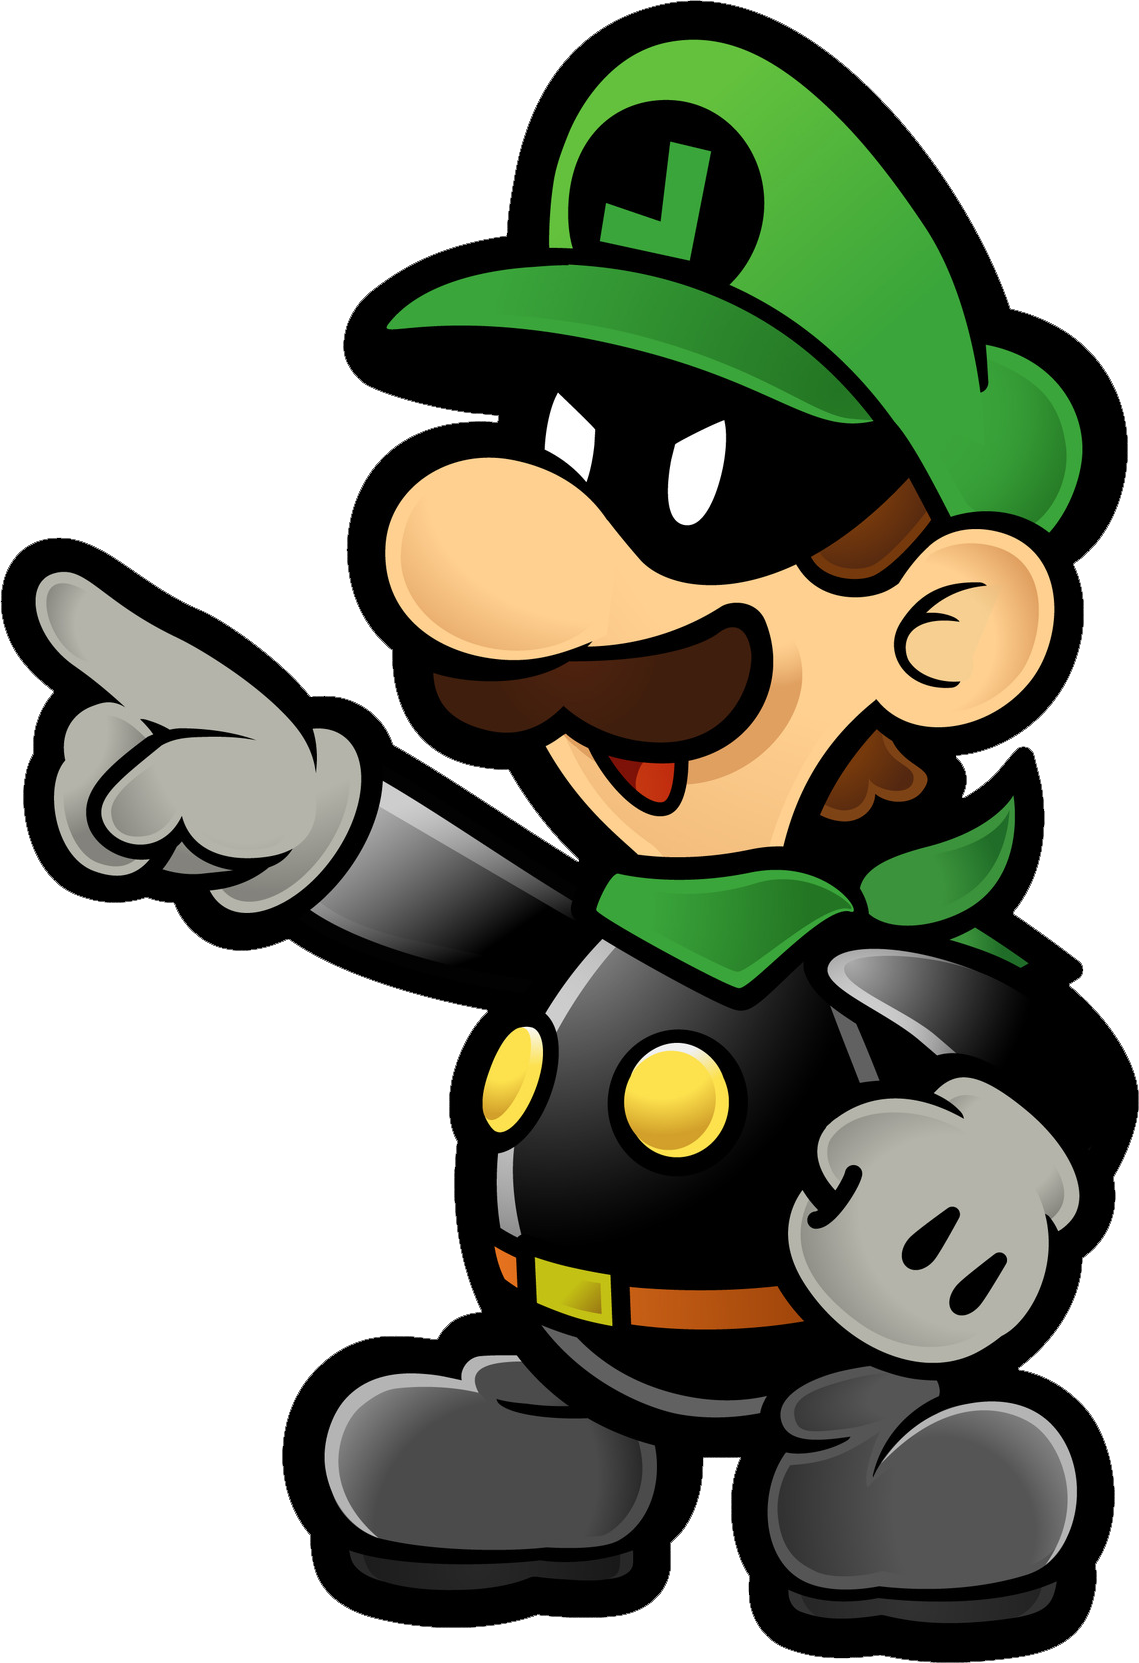 Super Smash Bros. - Super Mario Wiki, the Mario encyclopedia